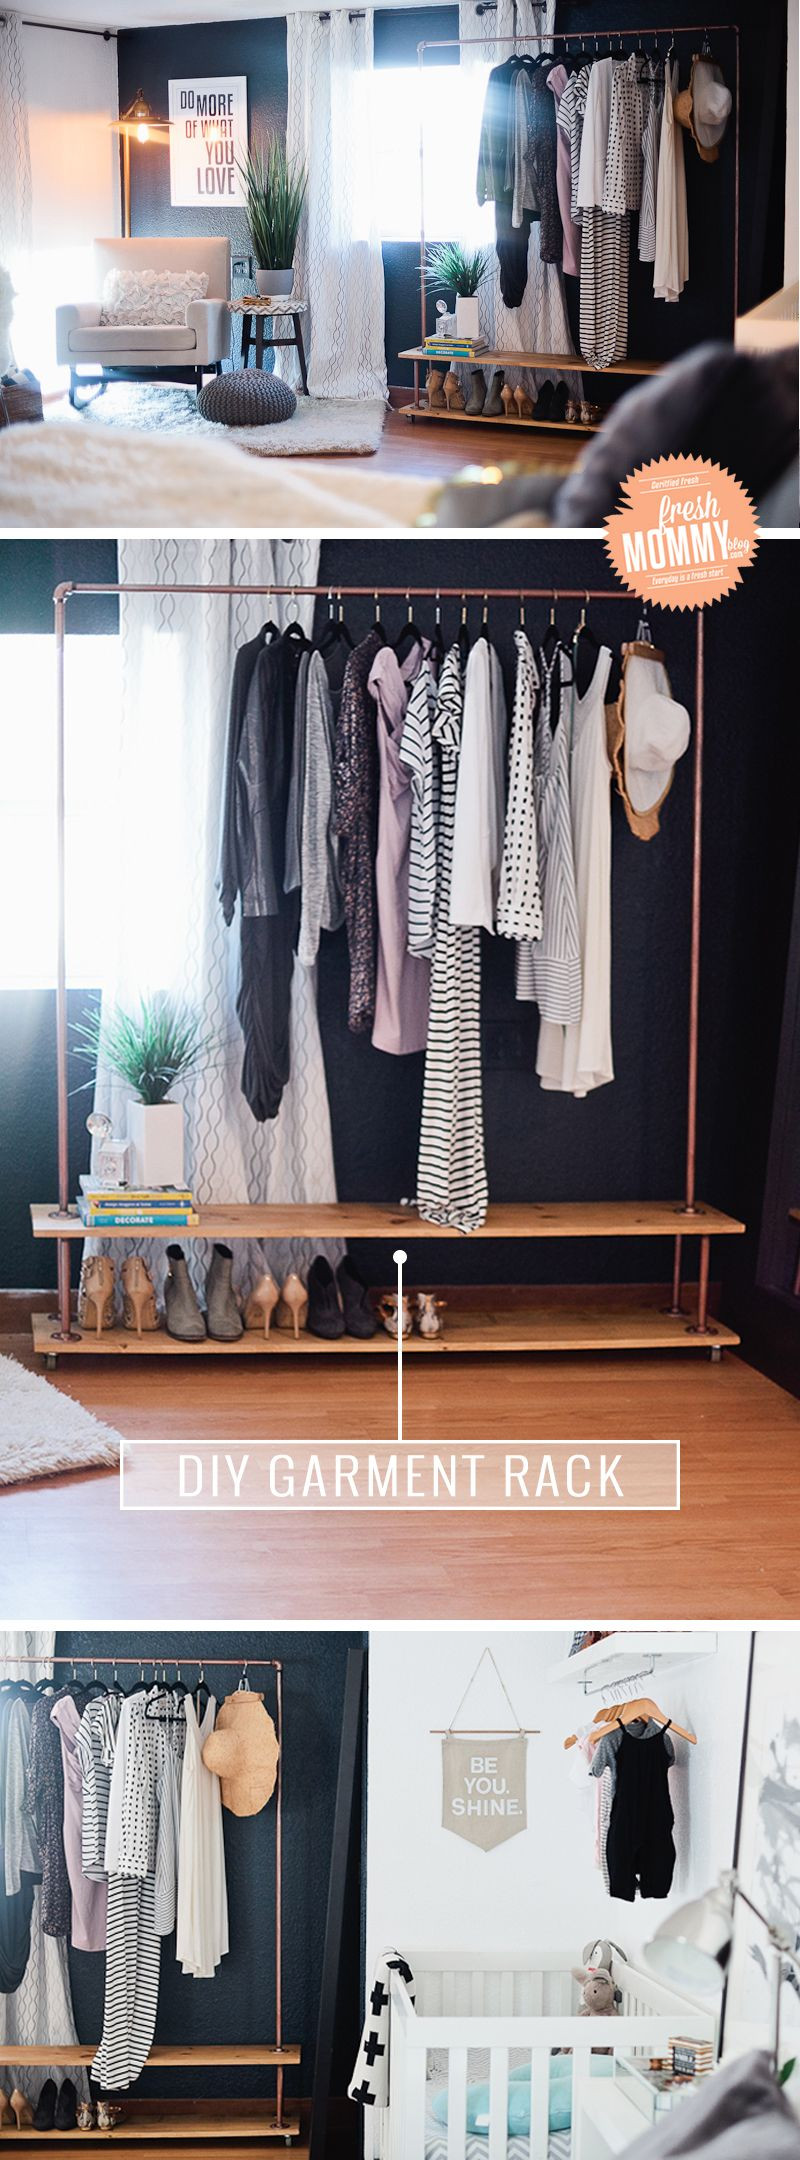 DIY Garment Racks
 Rolling DIY Garment Rack for Your Wardrobe